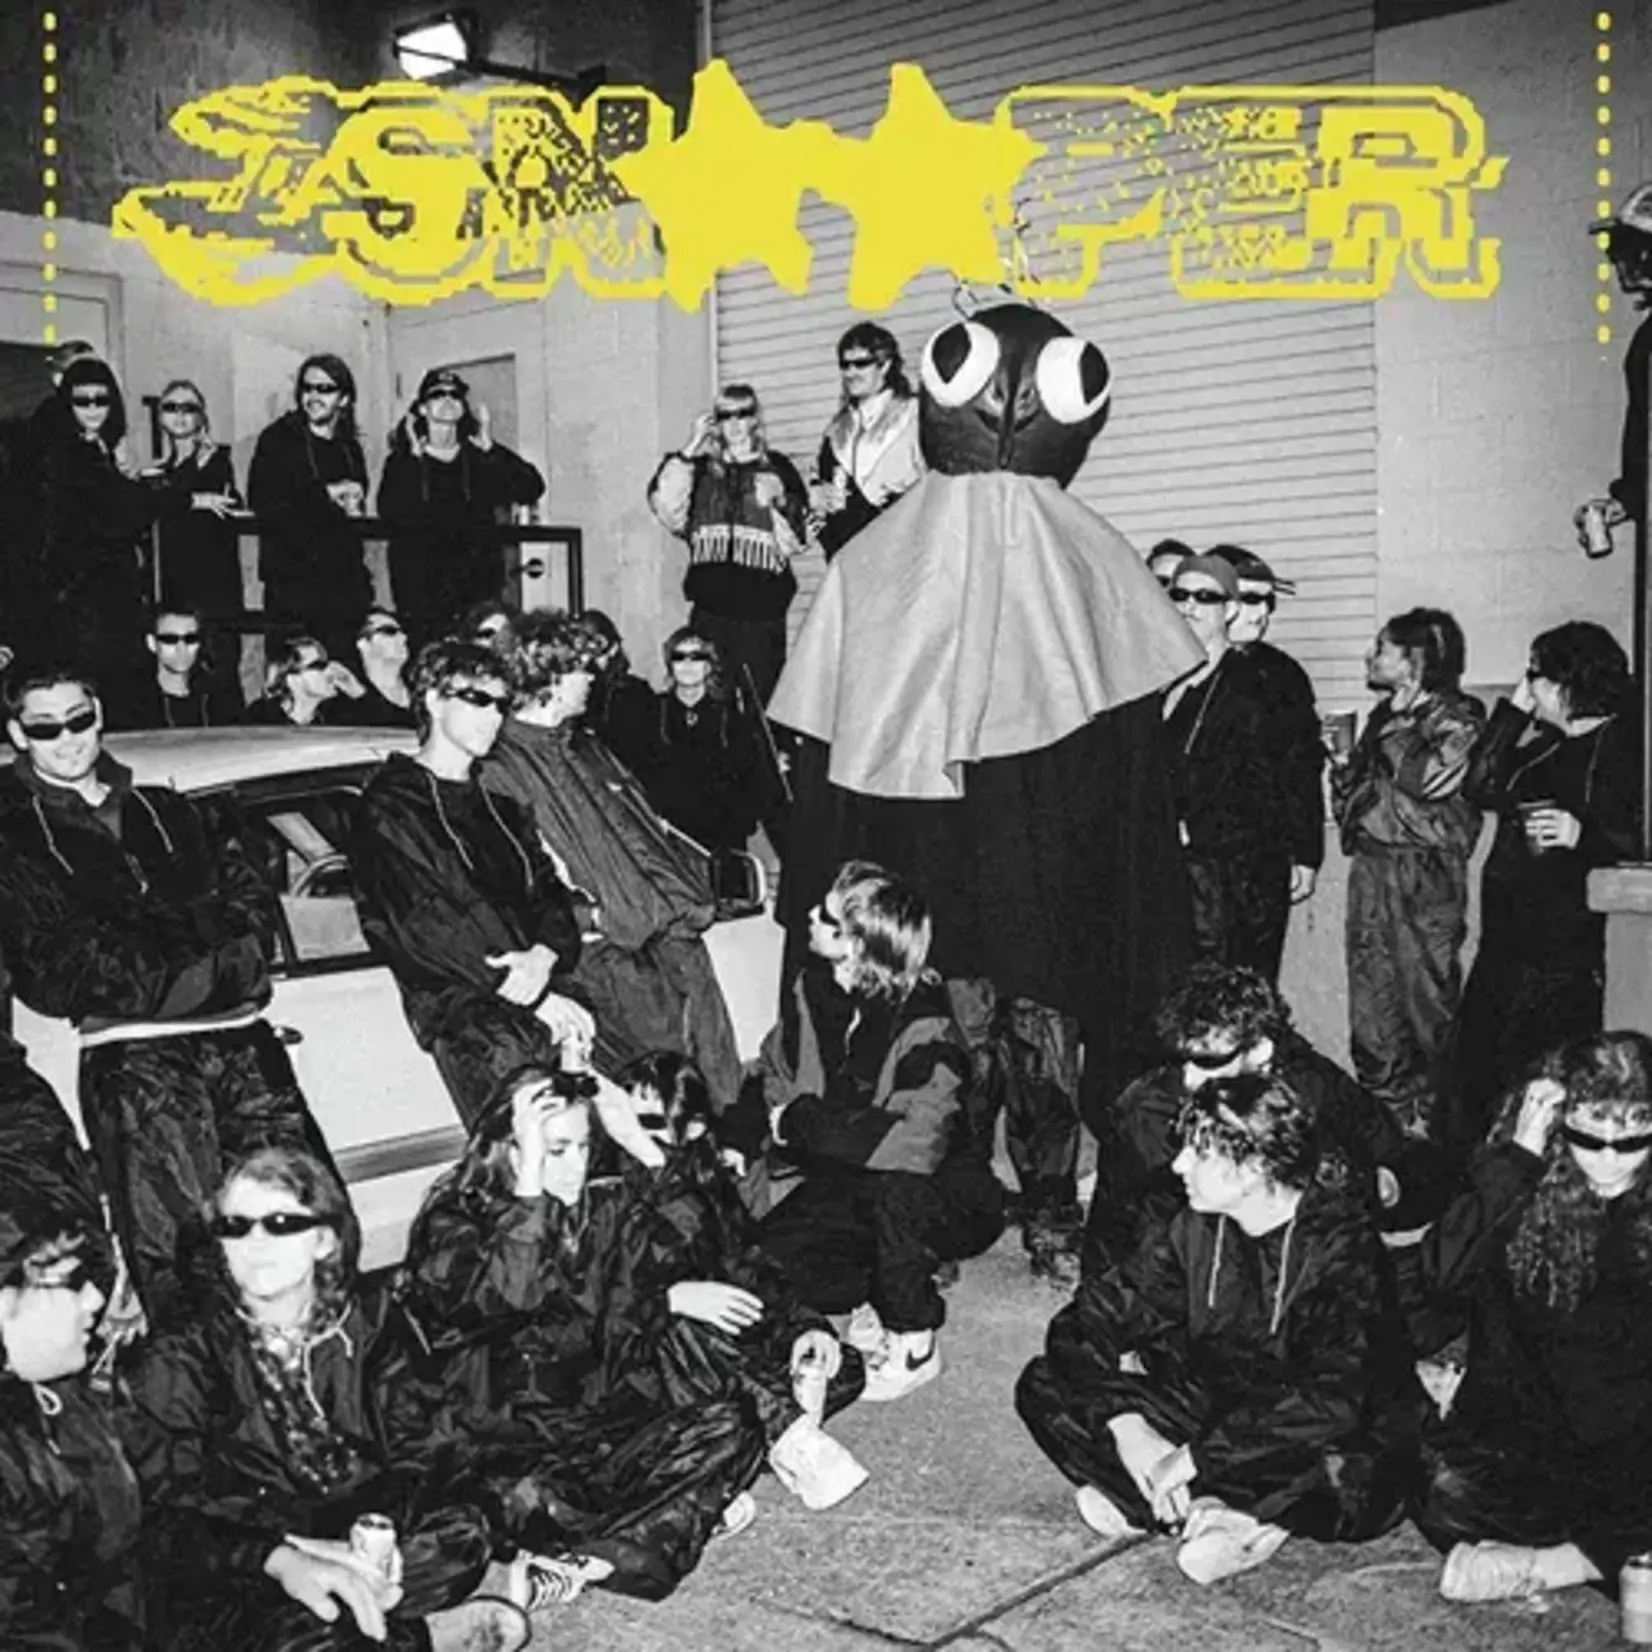 Third Man Snooper - Super Snooper (LP)